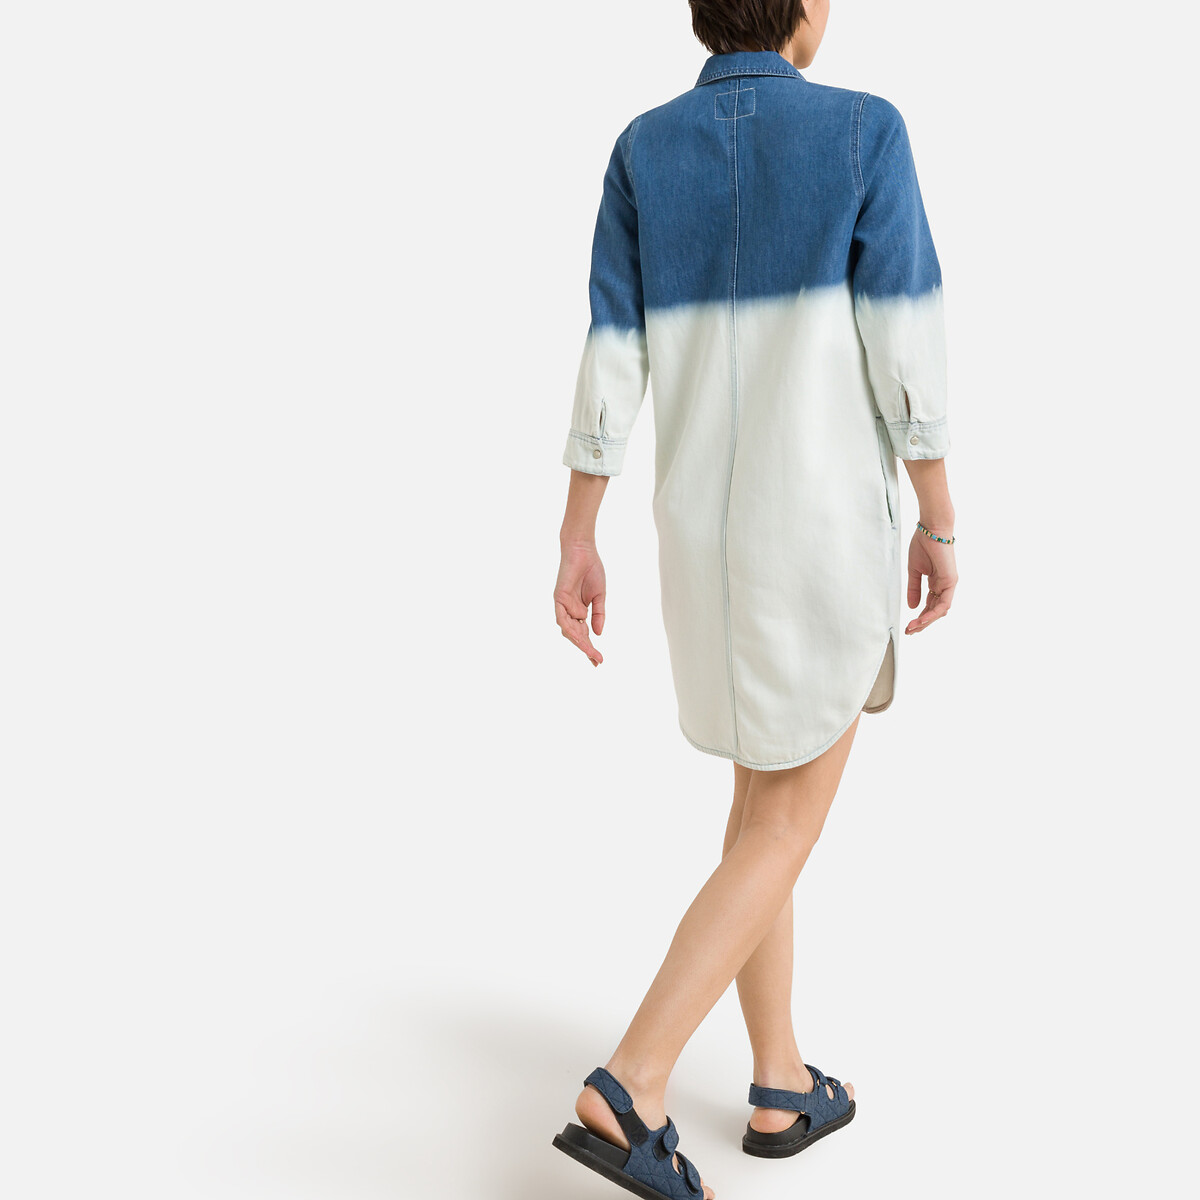 Платье-рубашка LEON & HARPER Из денима с принтом тай-энд-дай REXY XS синий, размер XS - фото 4